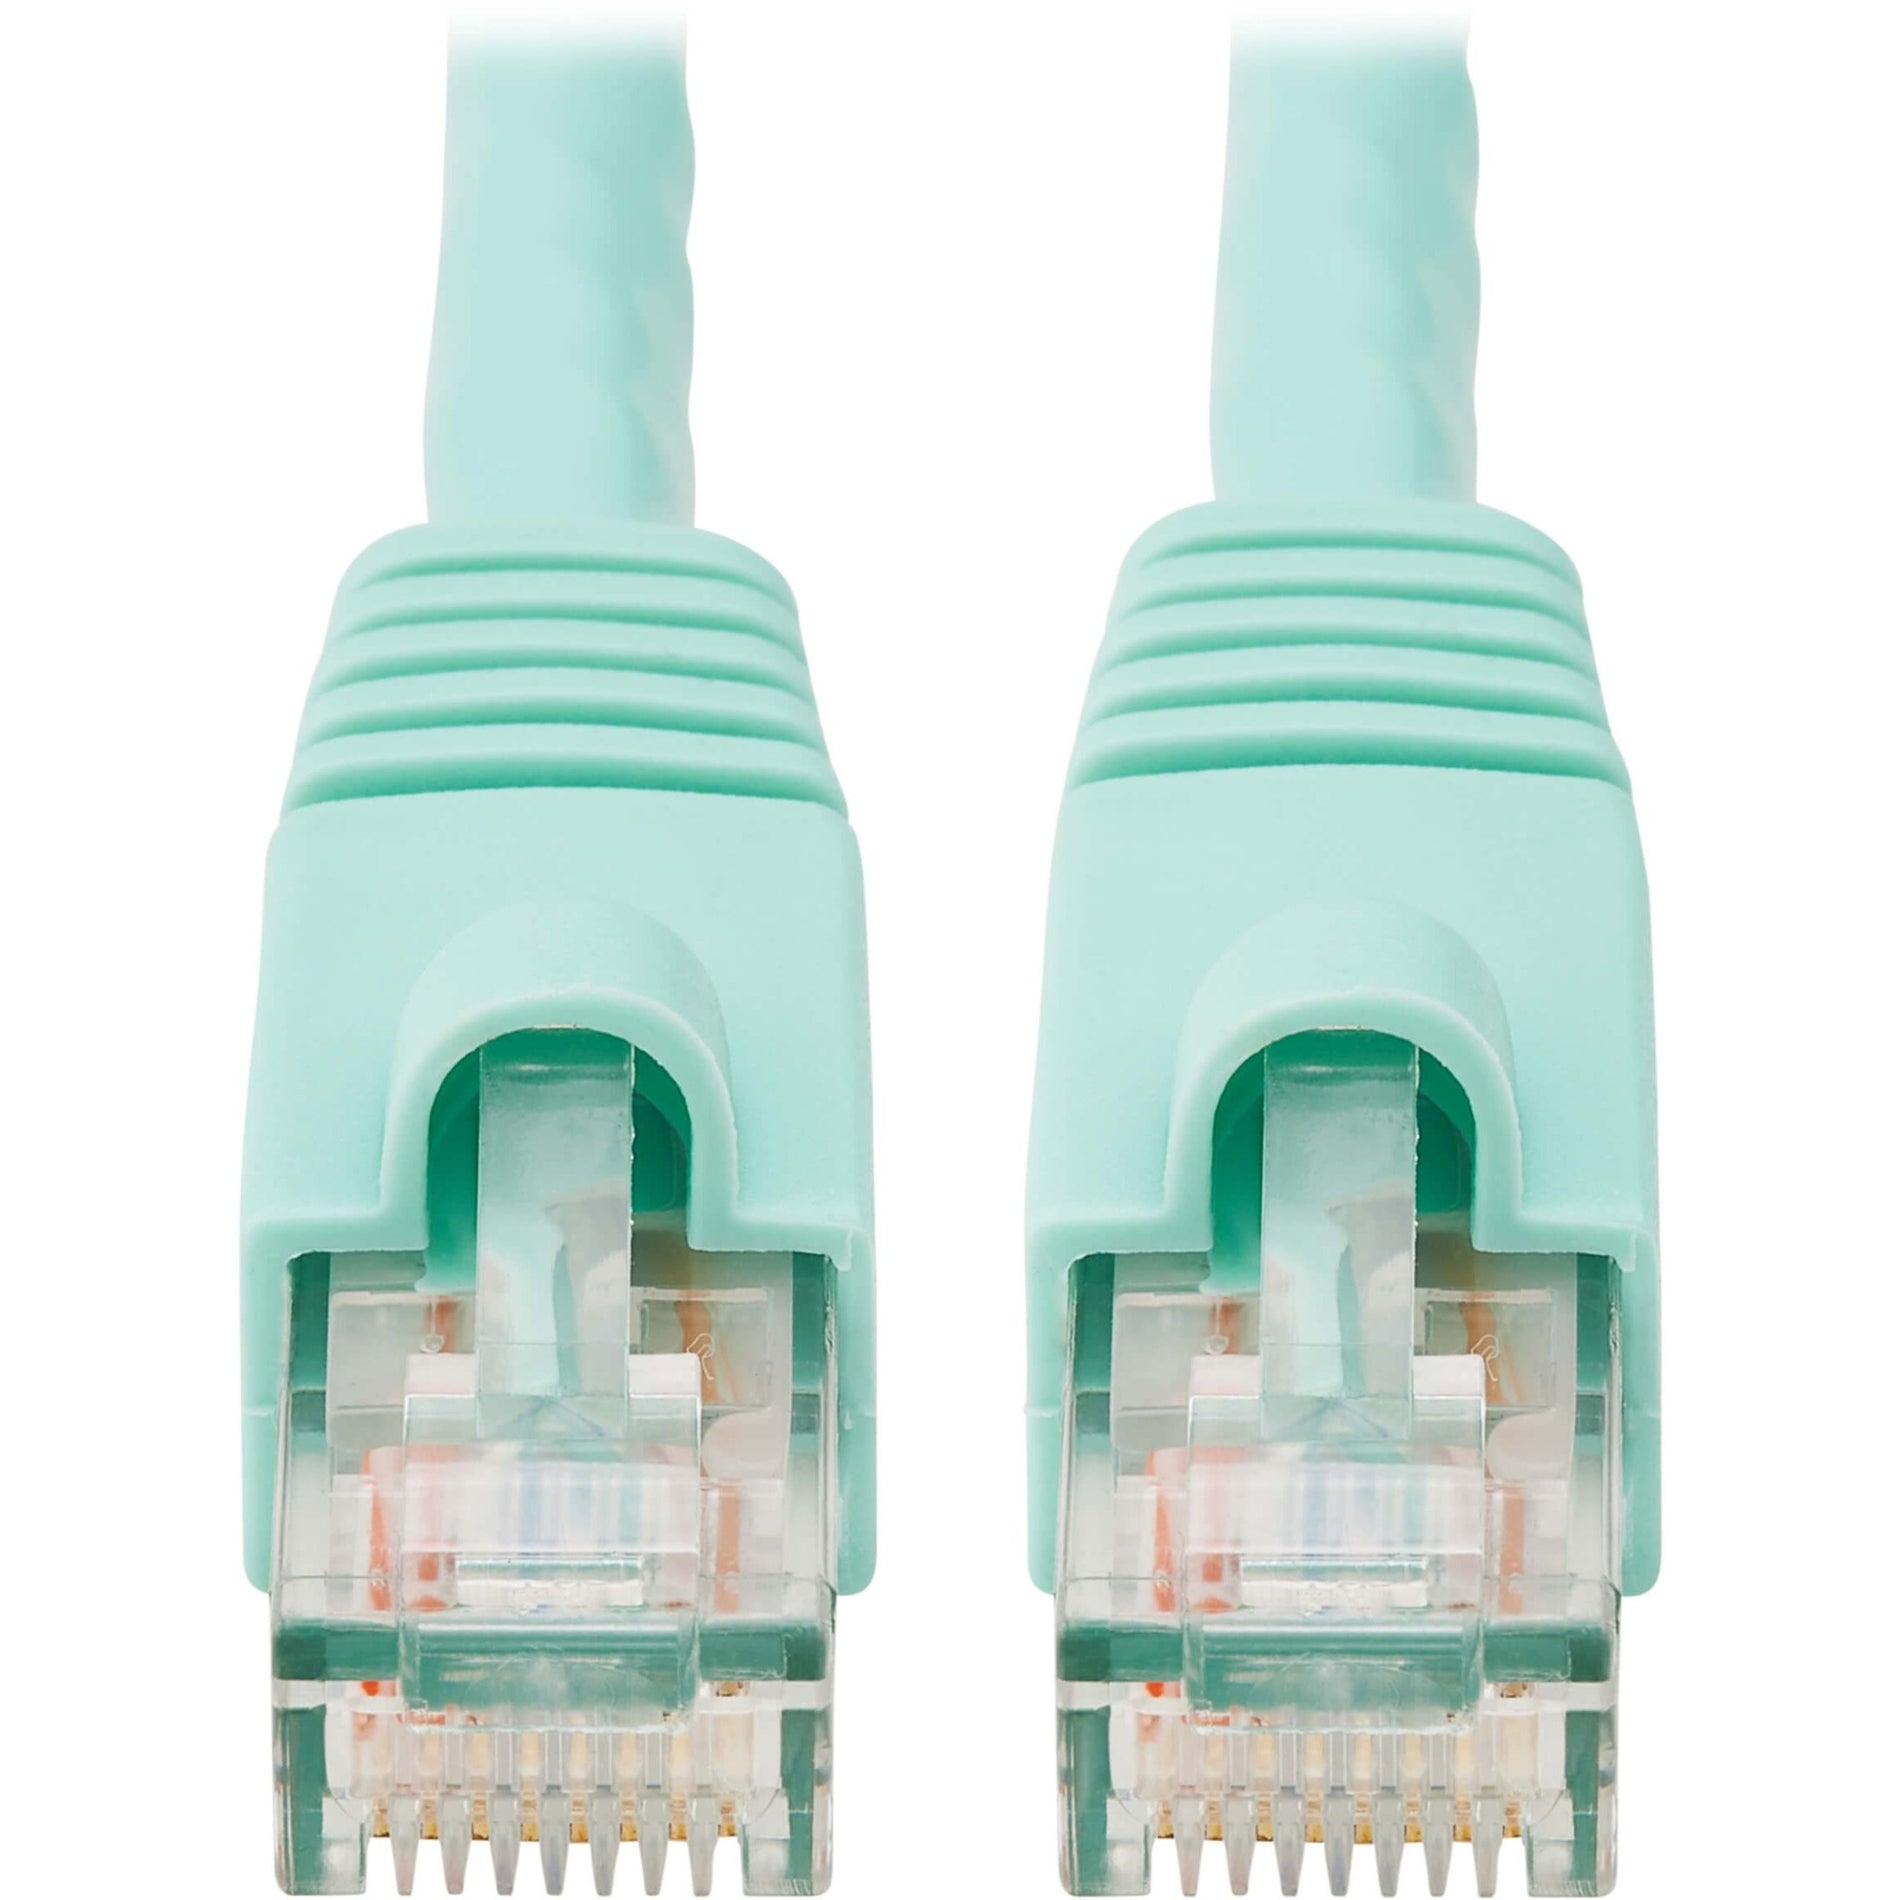 Tripp Lite N261-010-AQ Cat.6a Patch Network Cable, 10 ft, 10 Gbit/s Data Transfer Rate, Aqua